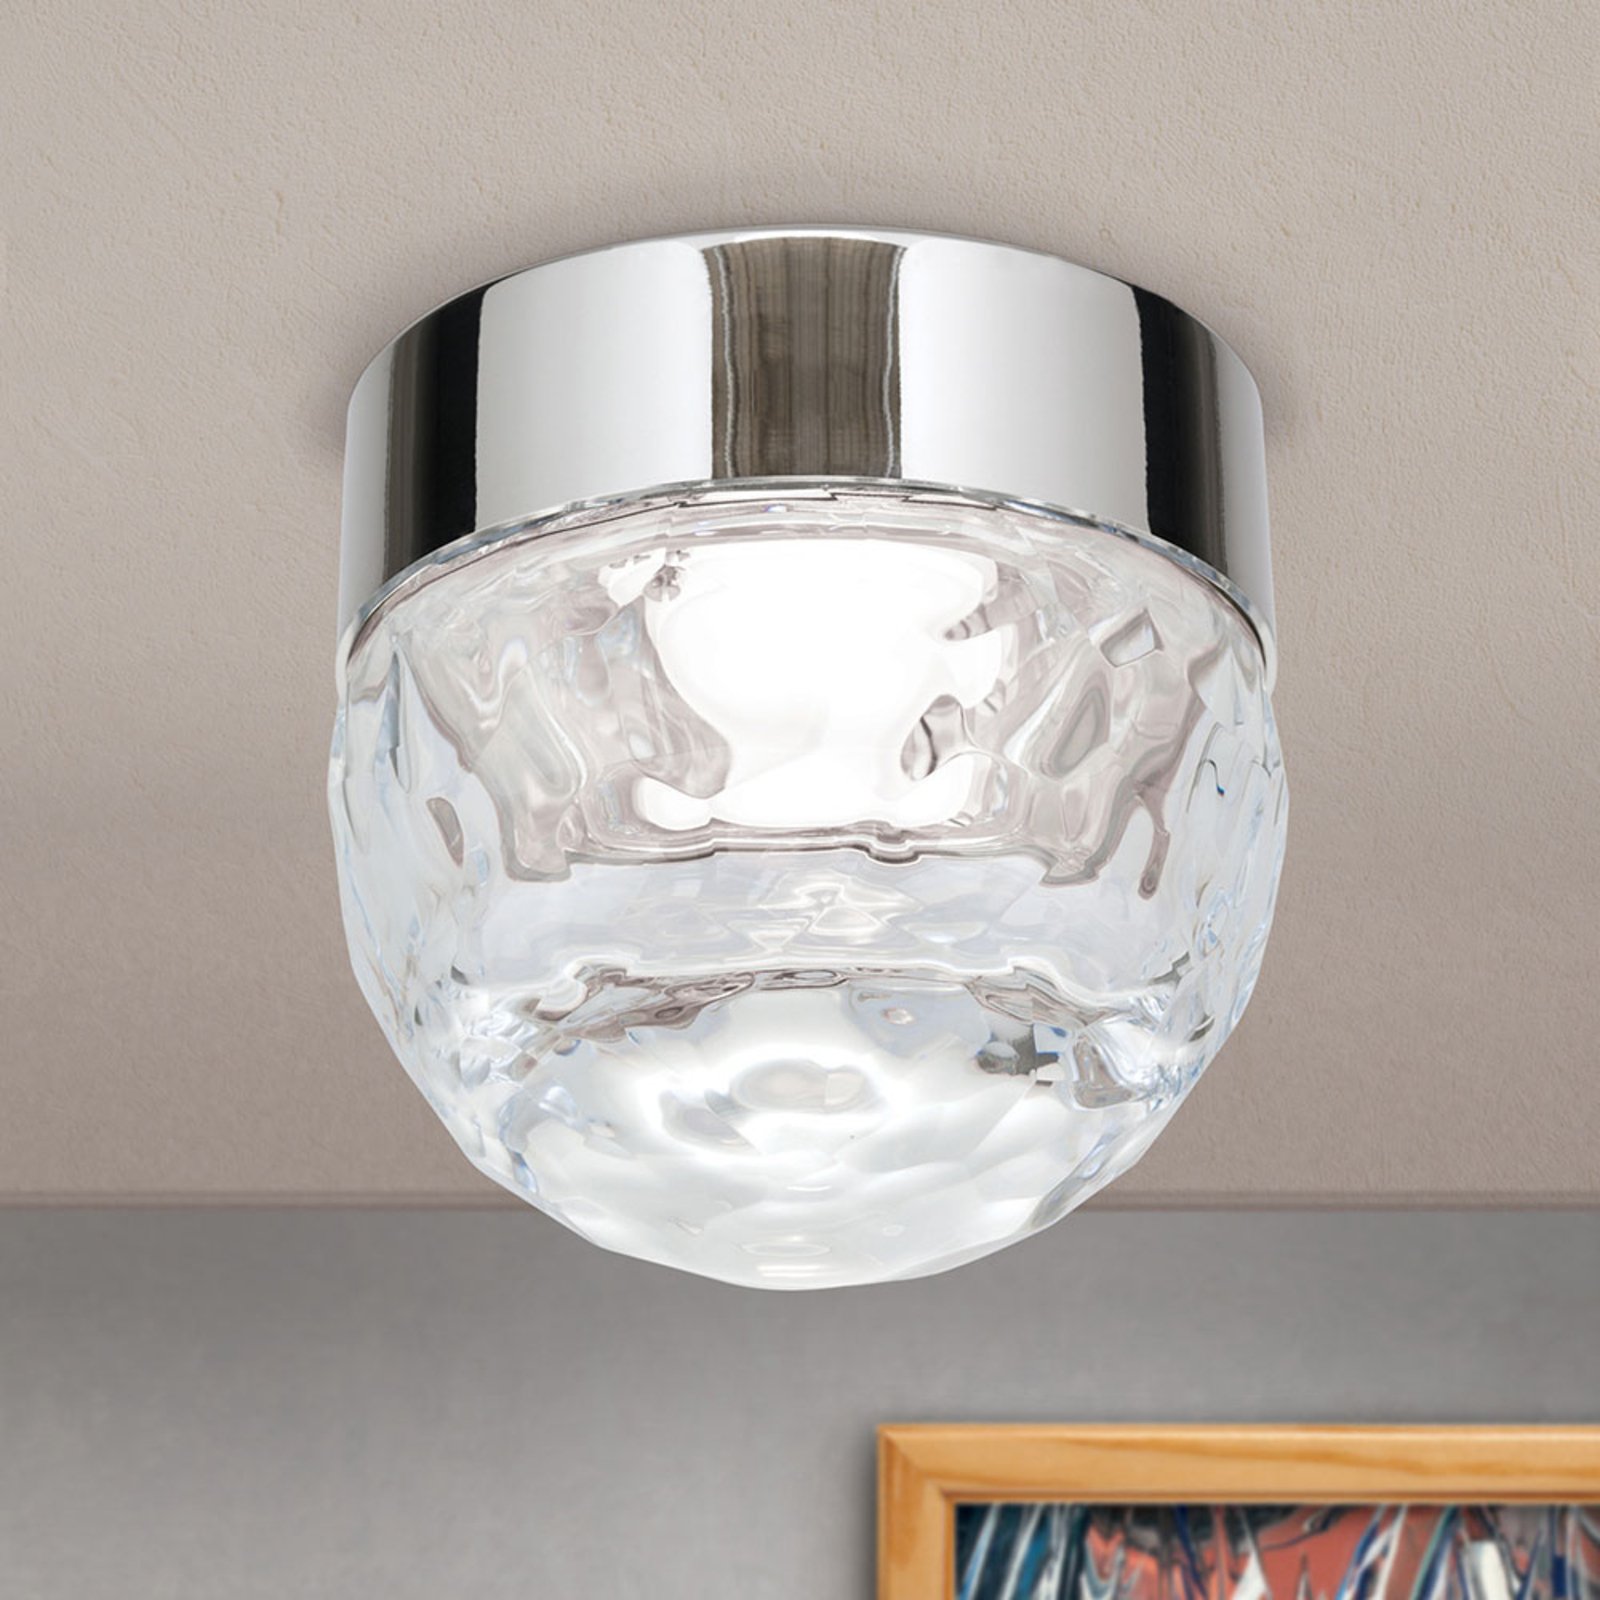 Ball LED ceiling light, 1-bulb, nickel, round